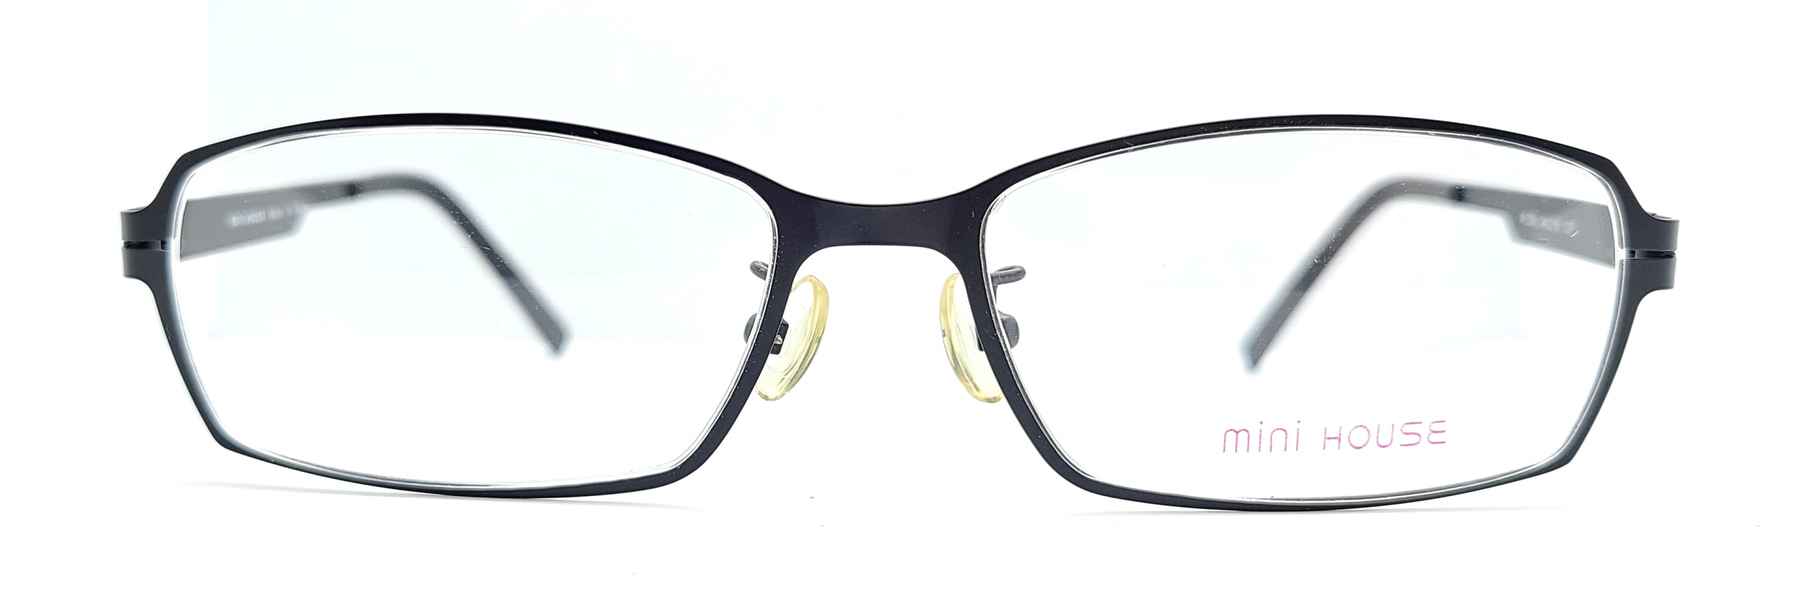 MINIHOUSE M-200, Korean glasses, sunglasses, eyeglasses, glasses